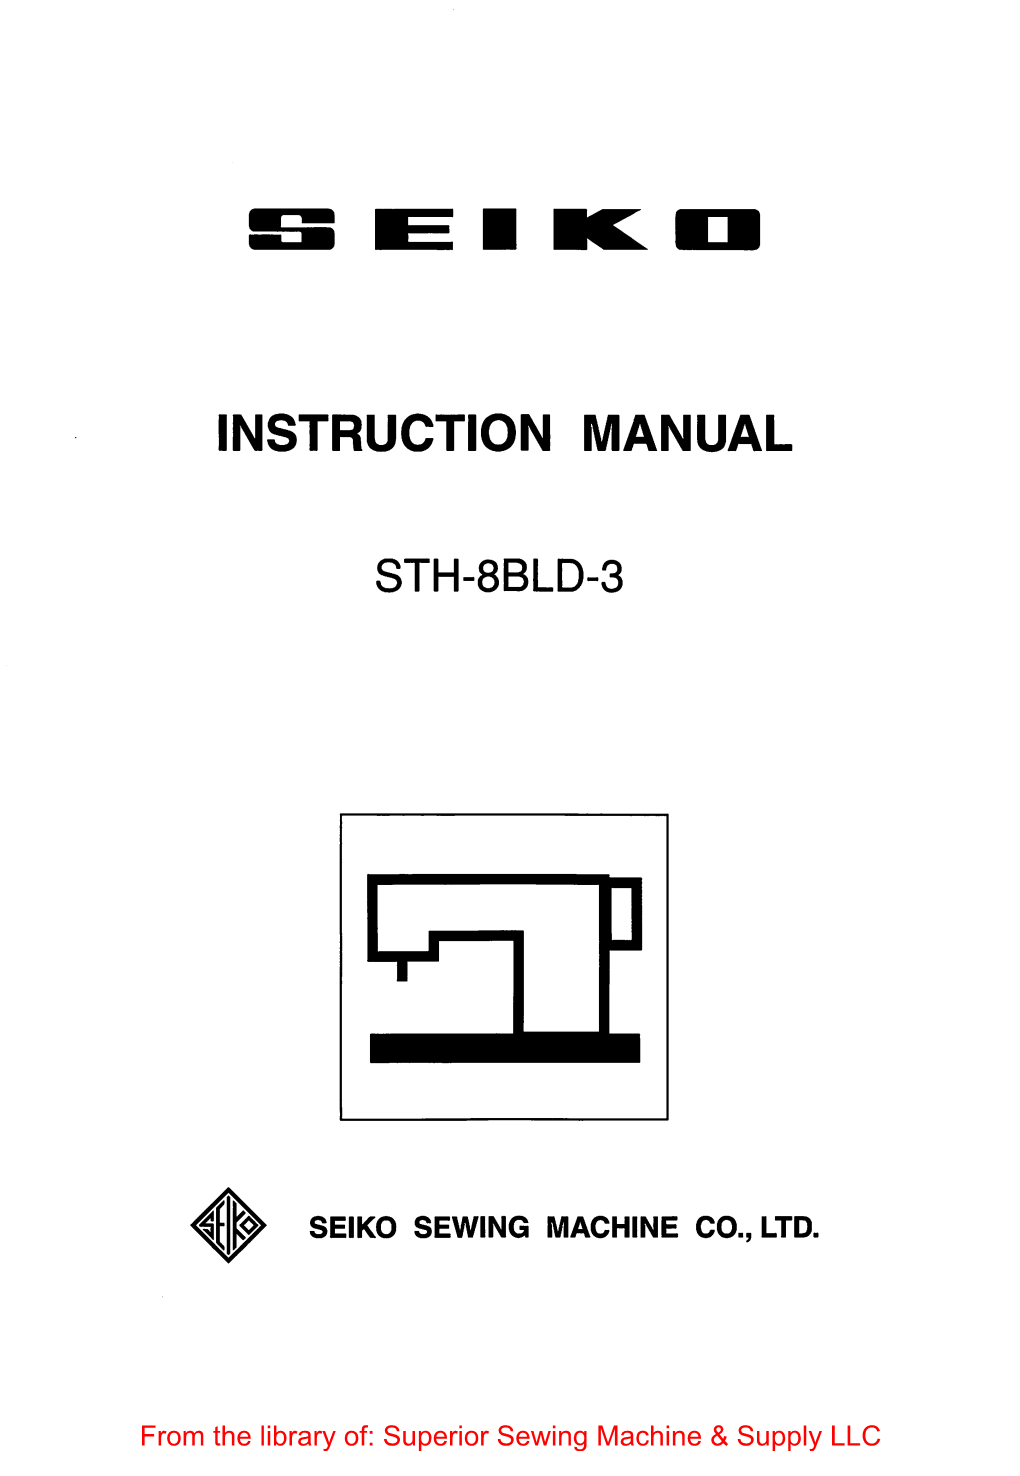 Seiko STH-8BLD-3 Instruction Manual.Pdf